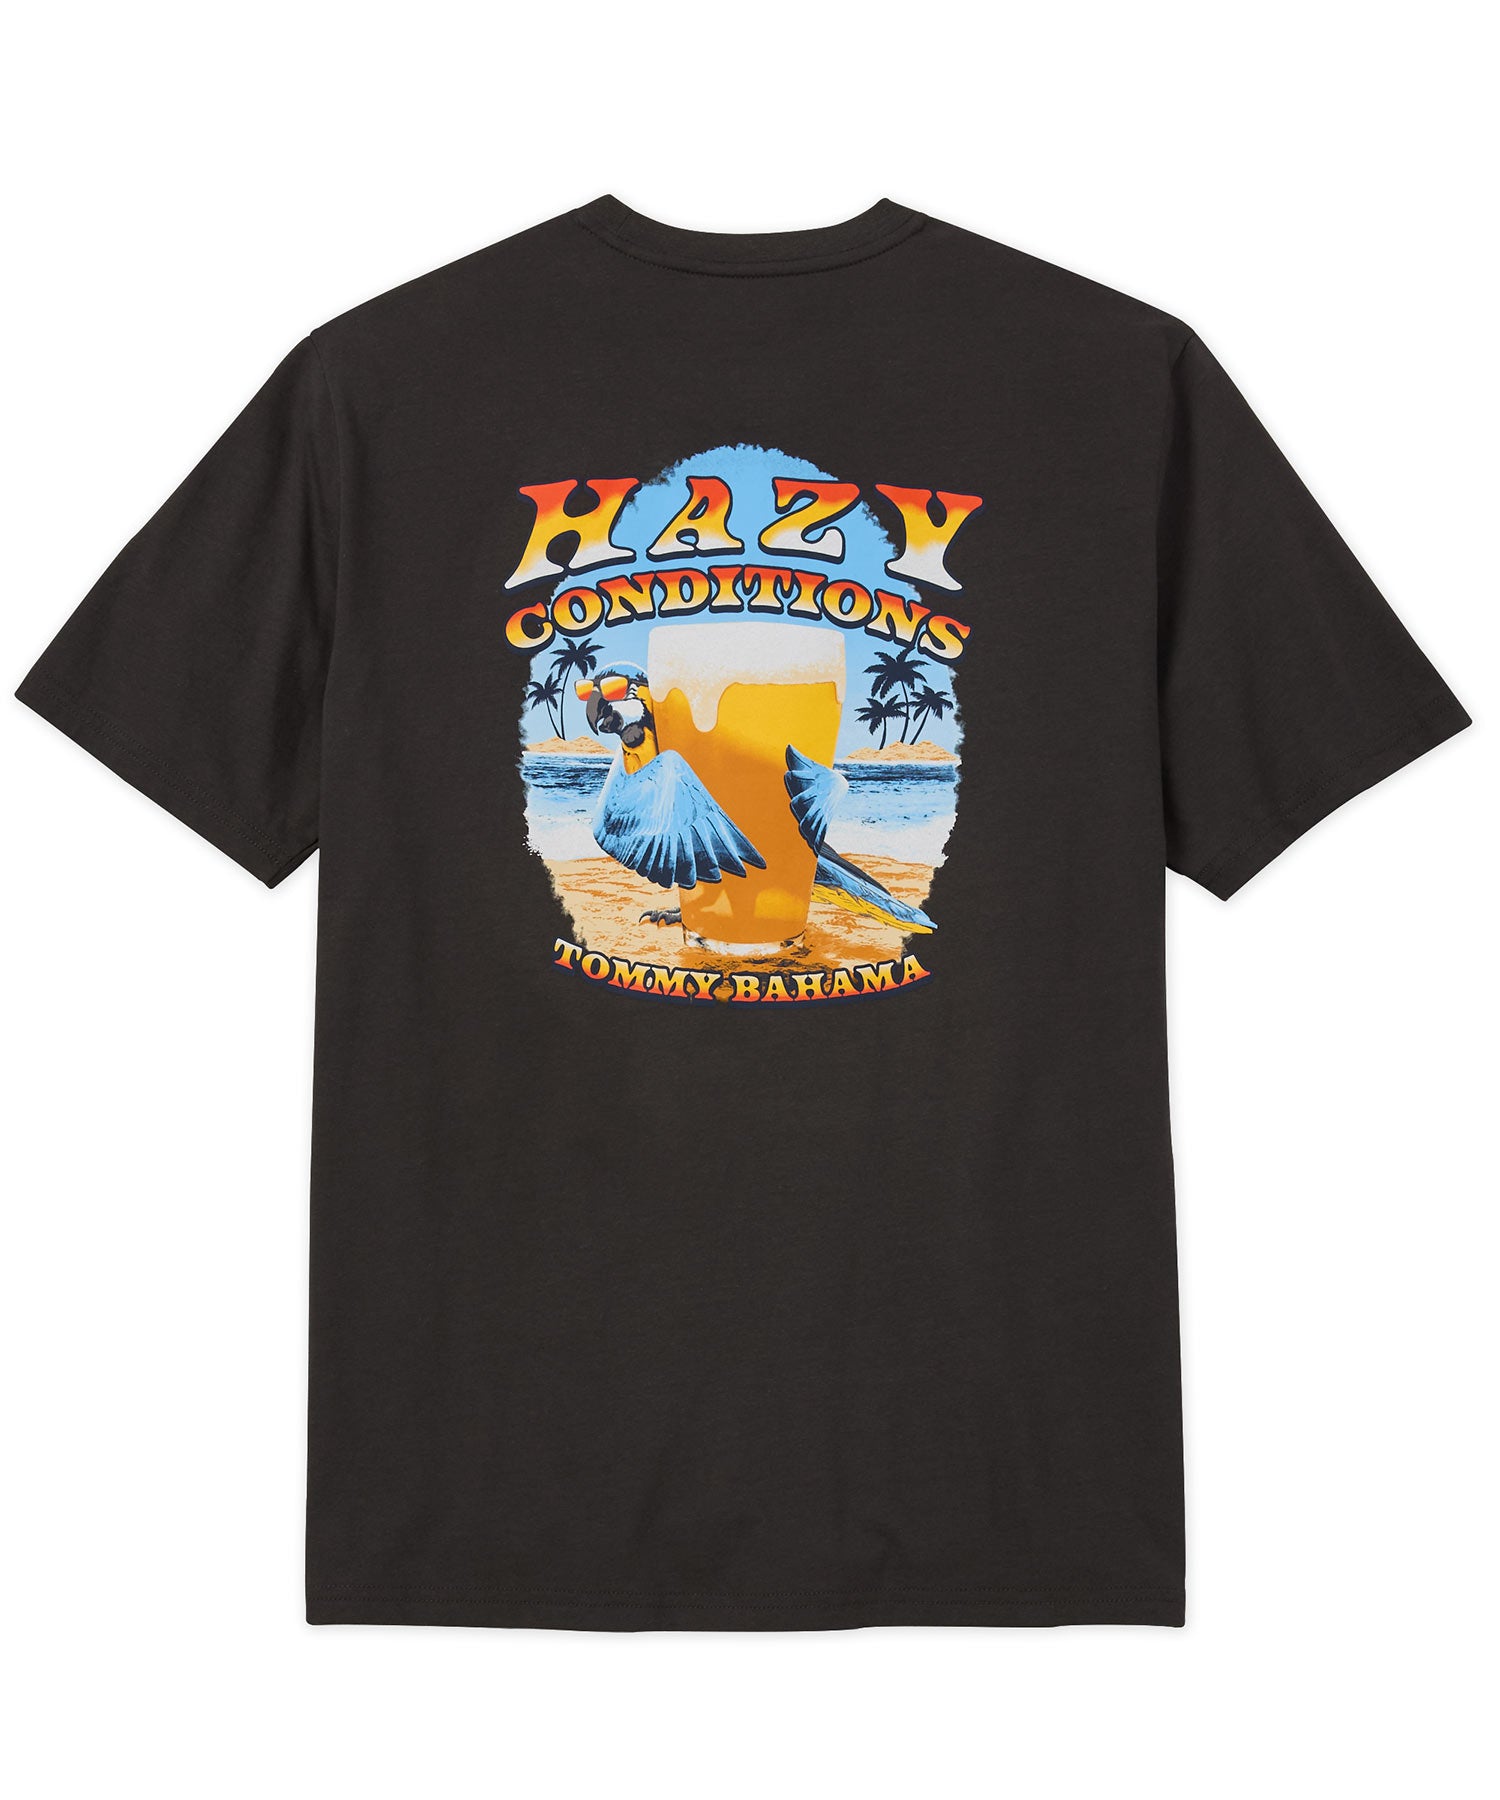 Tommy Bahama Short Sleeve 'Hazy Conditions' Crew Neck T-Shirt, Men's Big & Tall